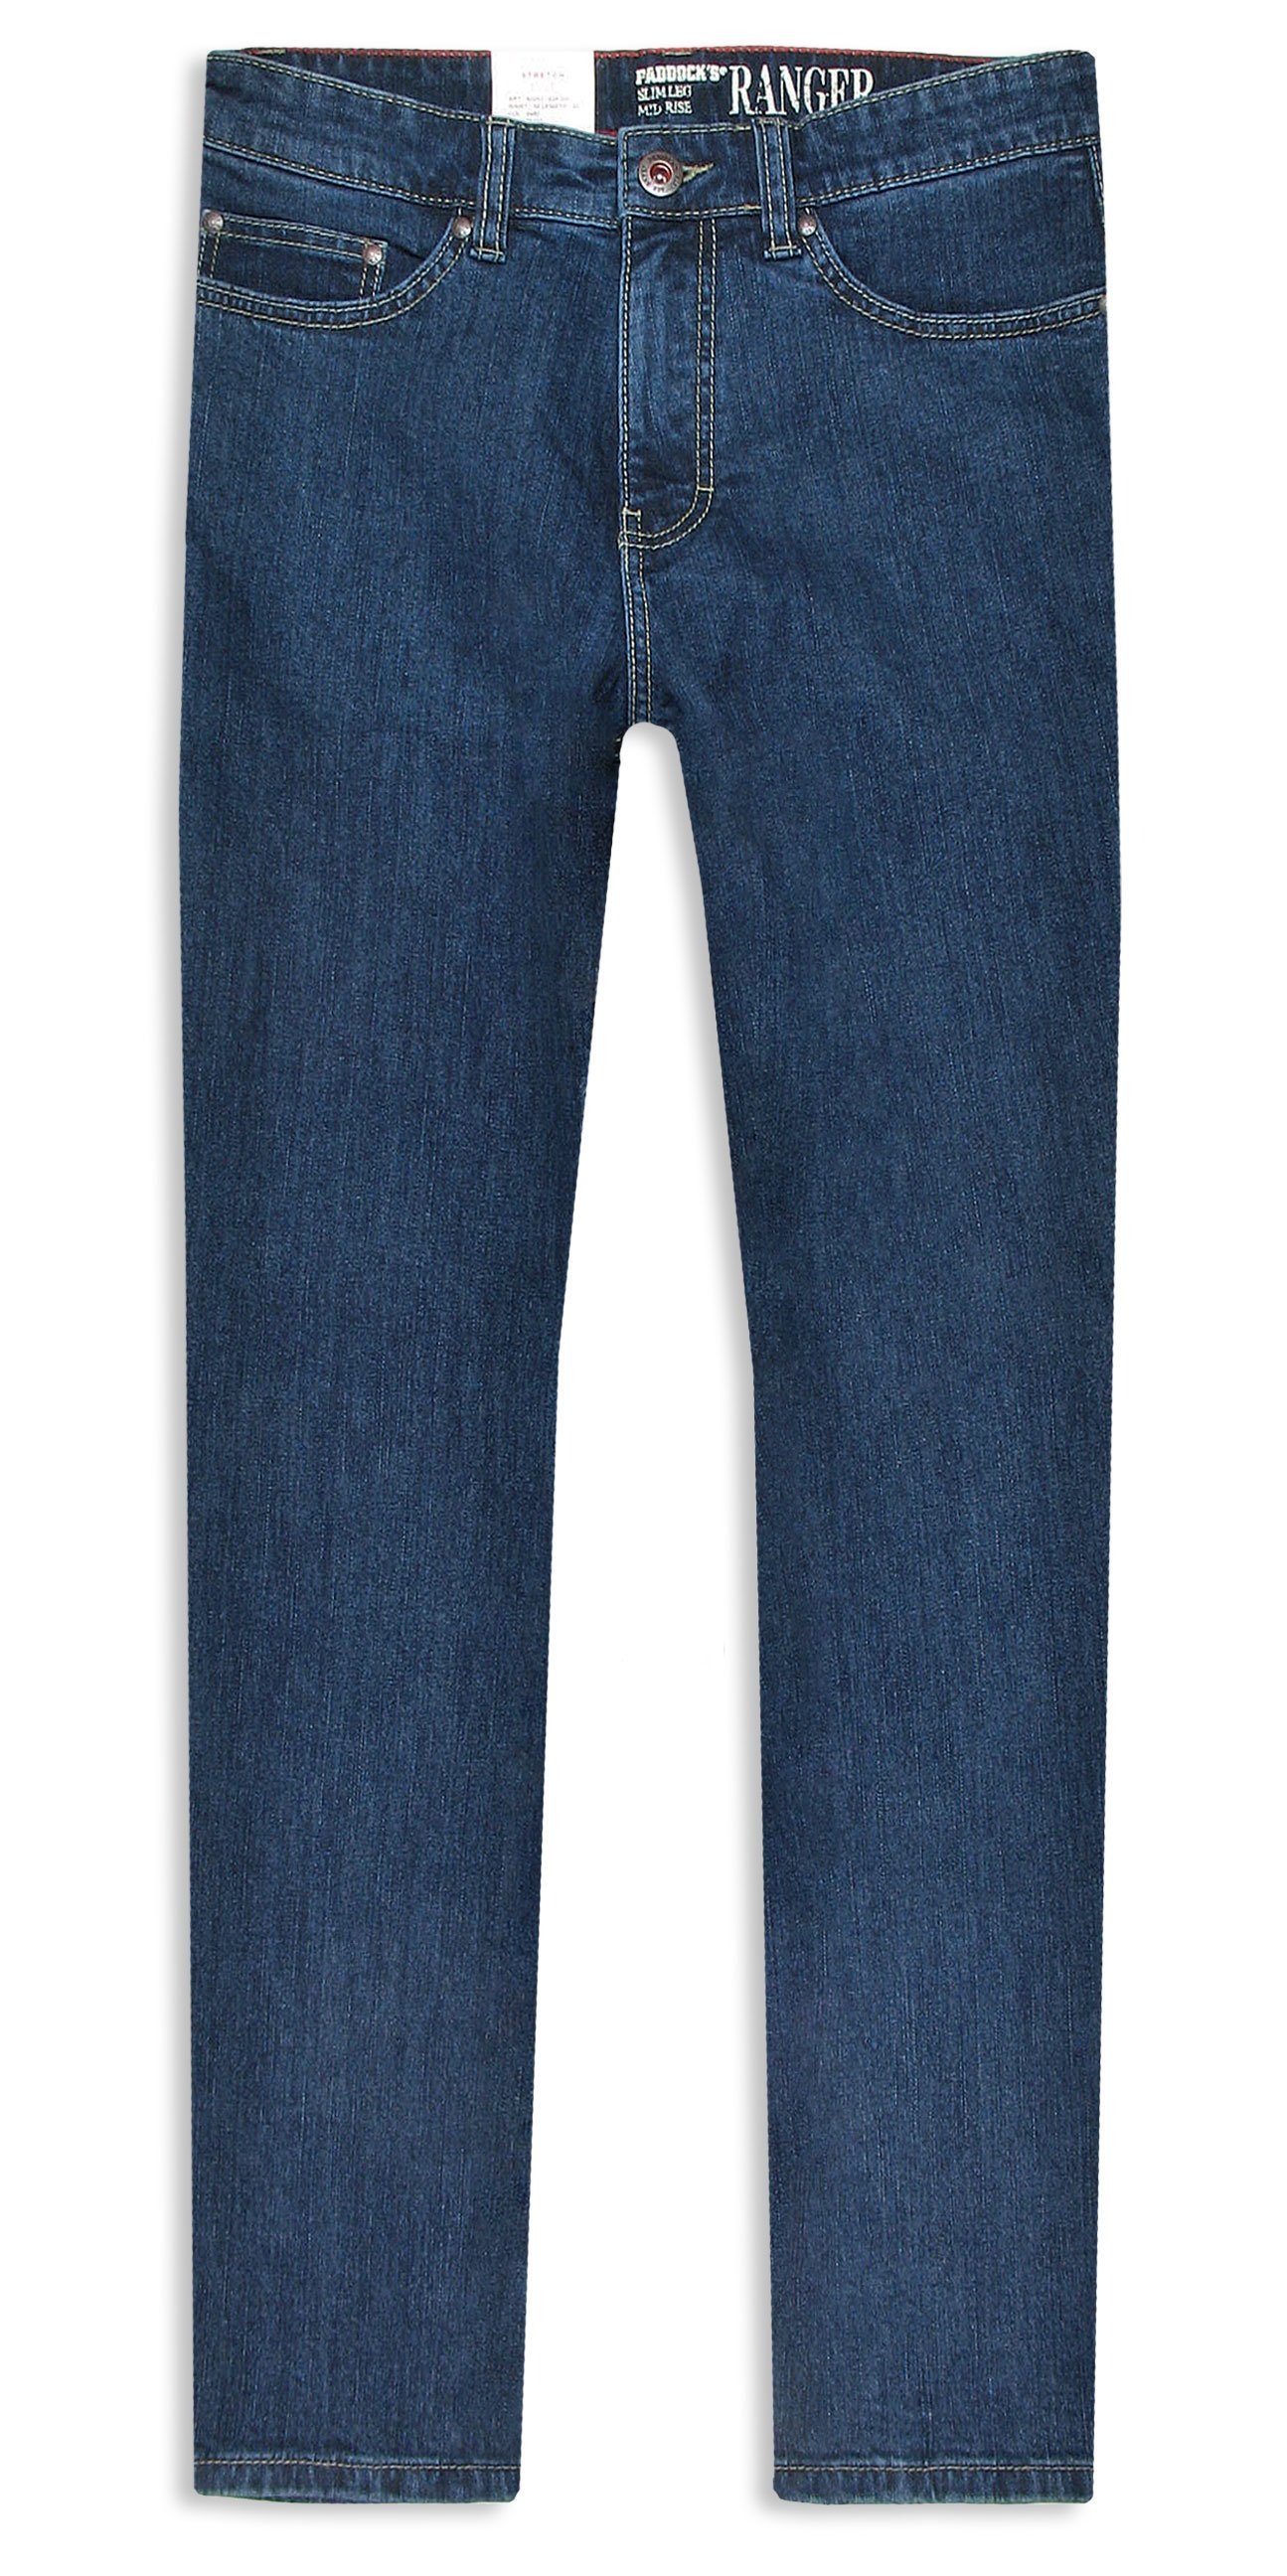 Ospig Paddock's 5-Pocket-Jeans Ranger Stretch Denim 4480 dark stone blue